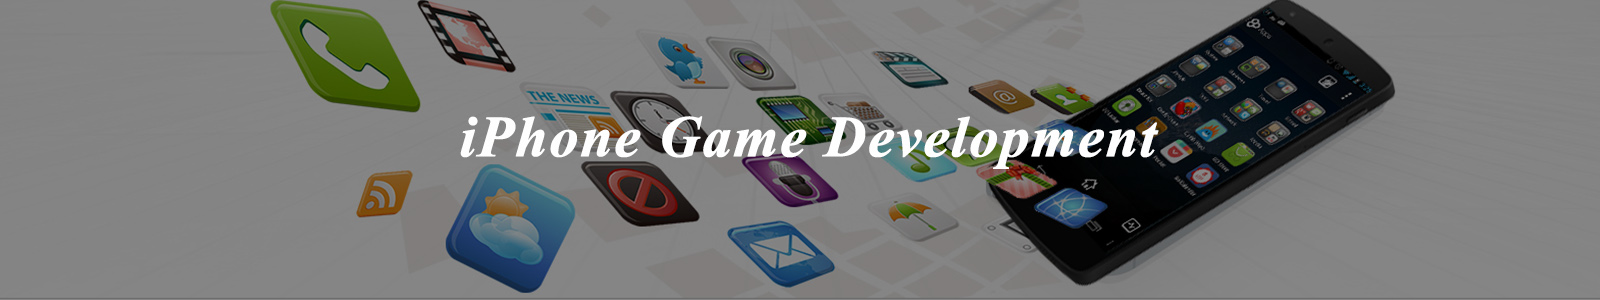 iphone game development